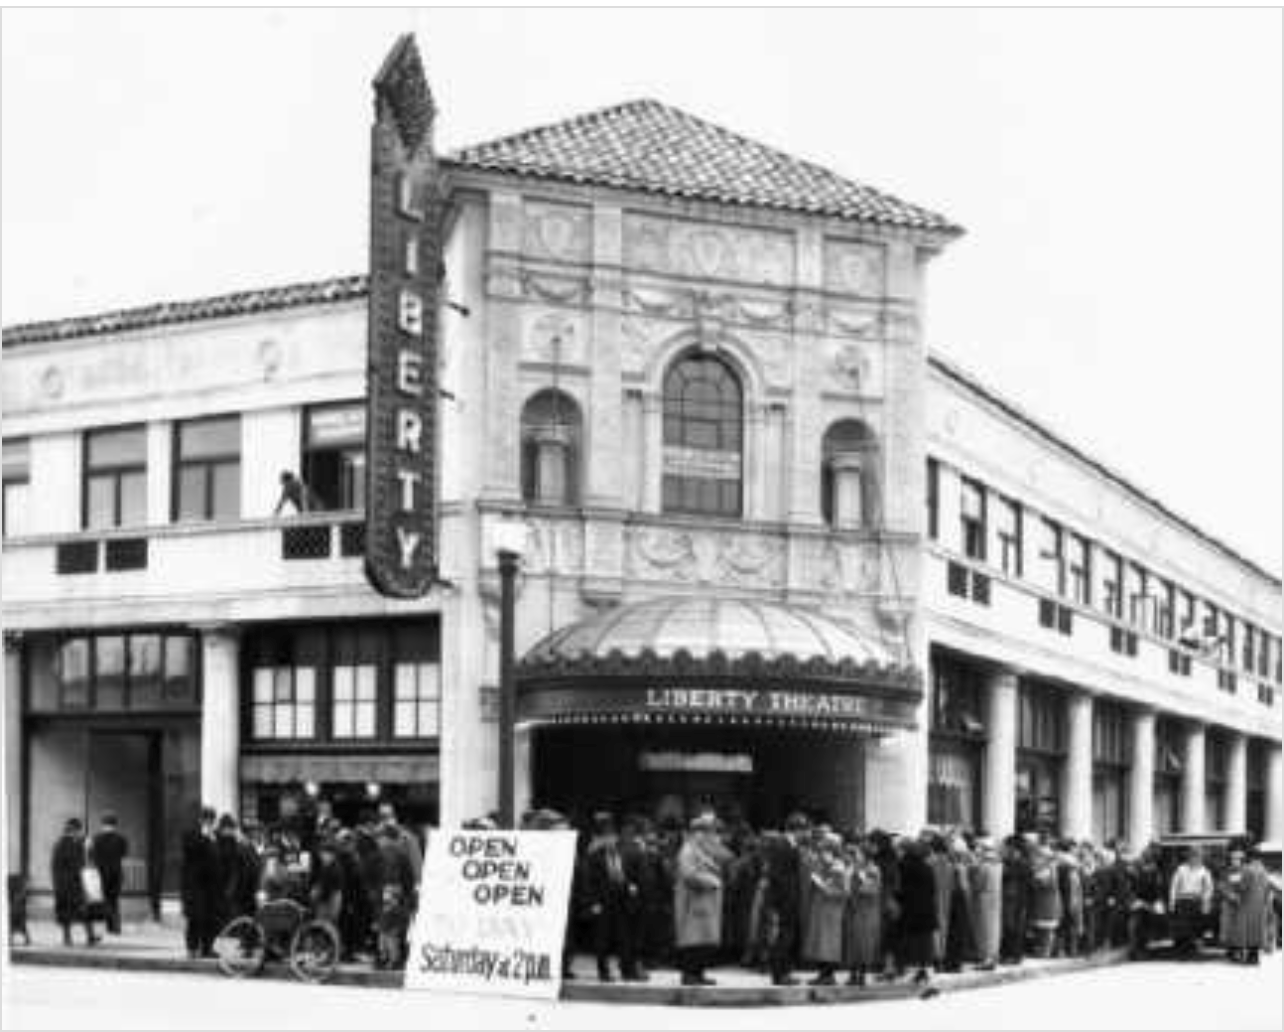 Opening Night in 1925 of Liberty Theatre in Astoria, Oregon